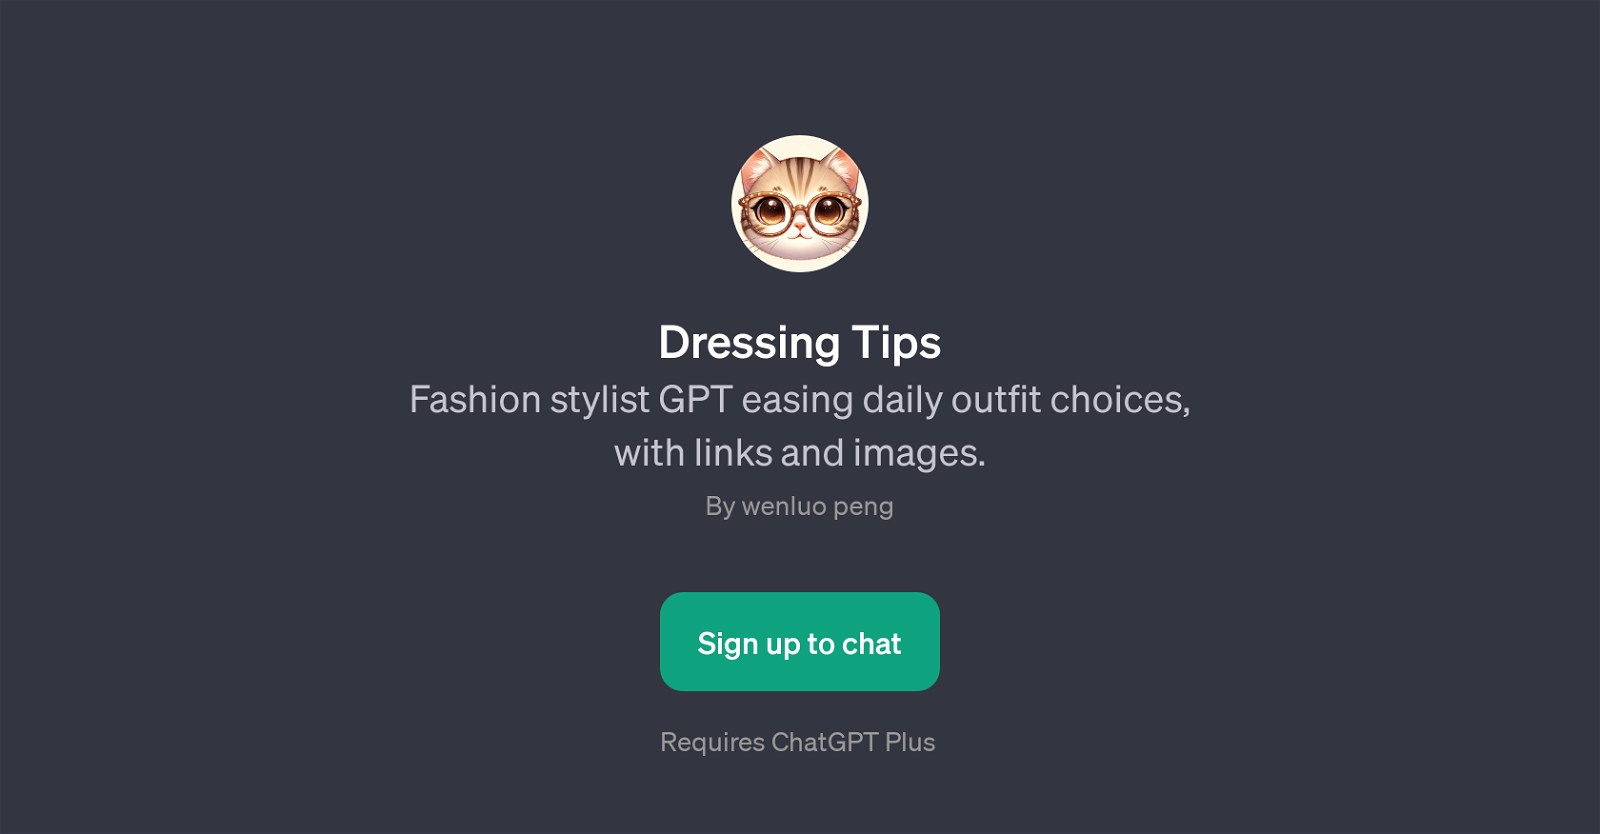 Dressing Tips website